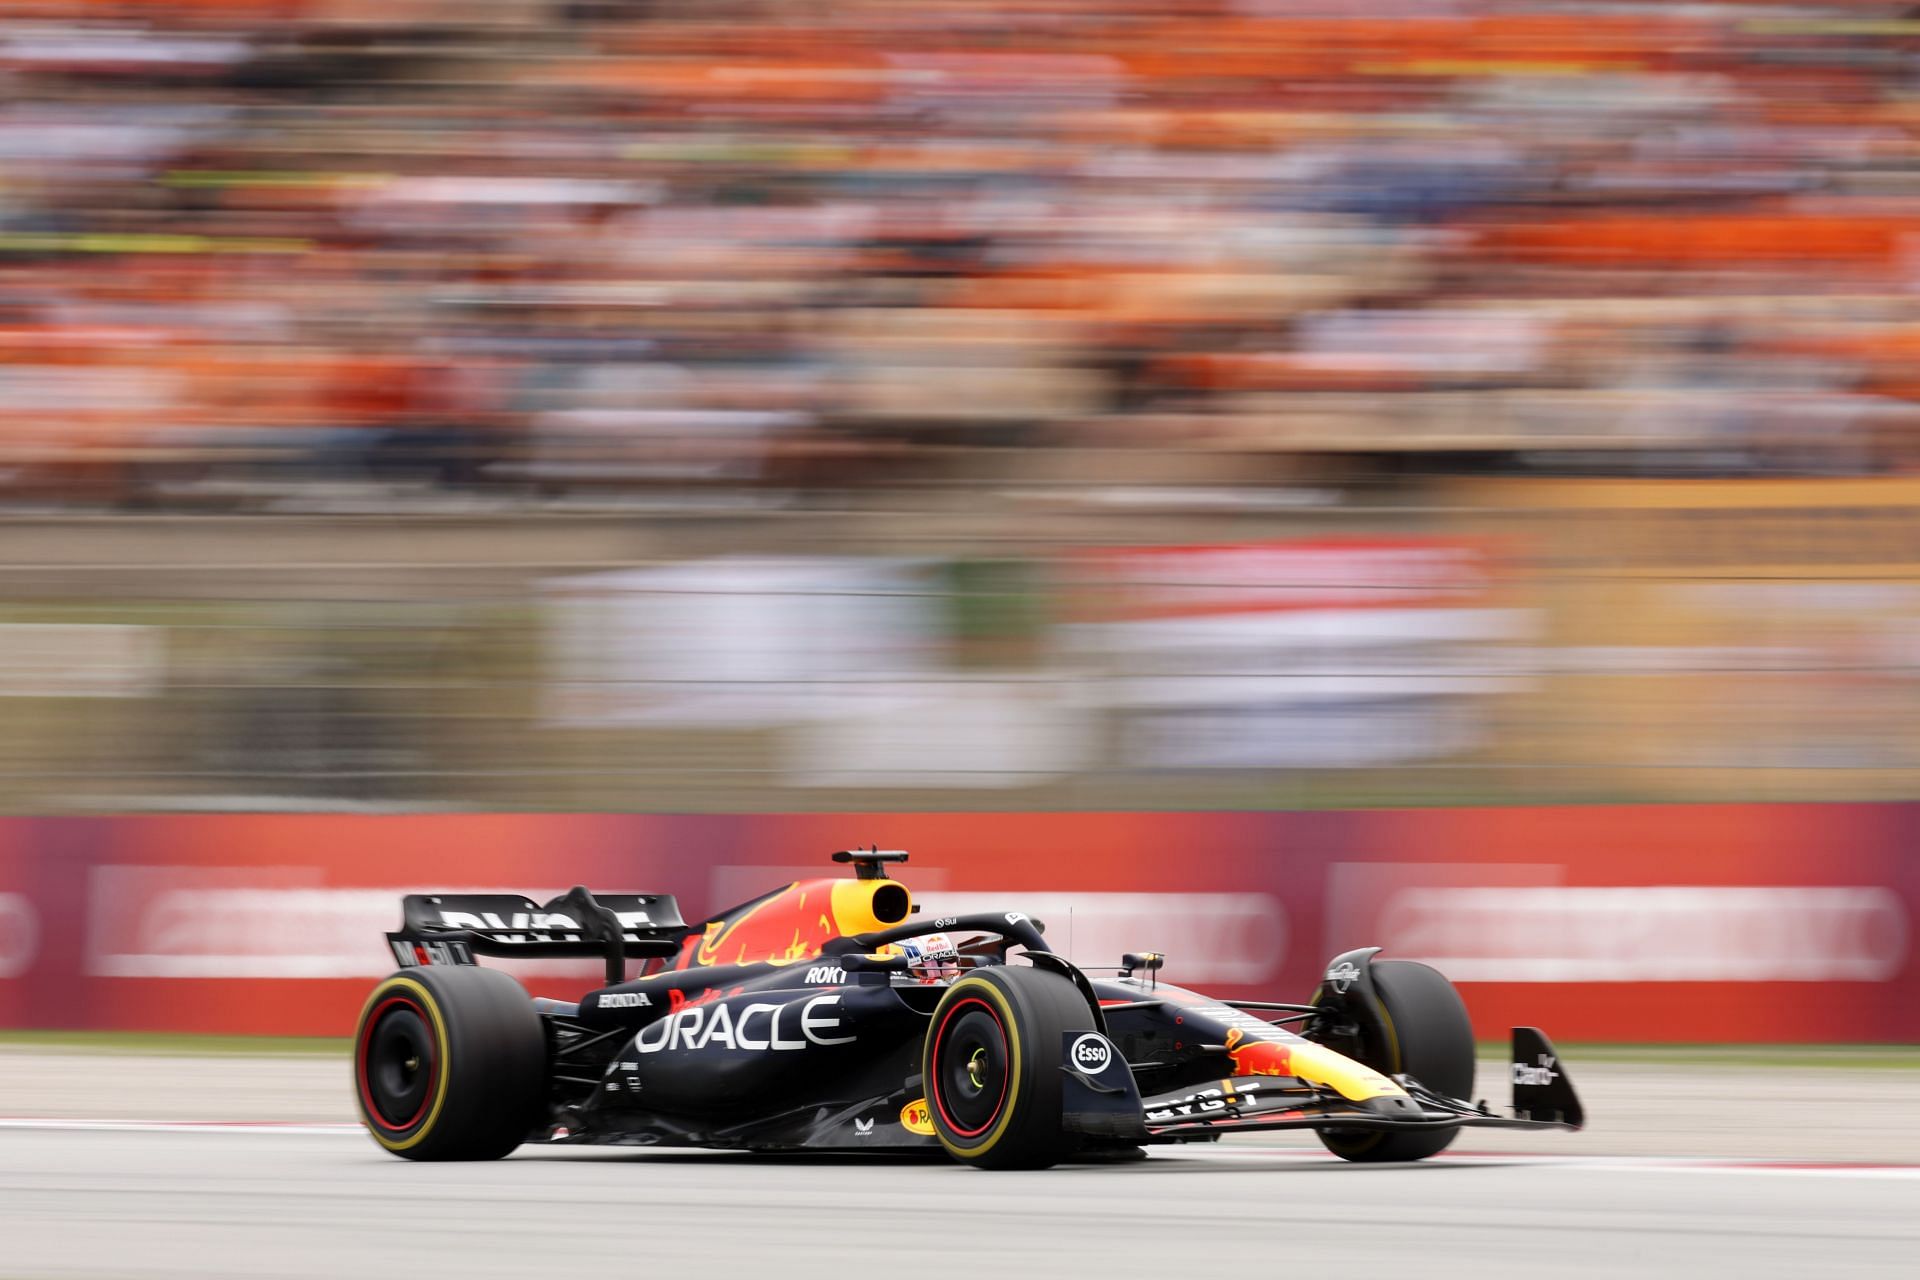 Max Verstappen speeding through during the Spanish Grand Prix (Photo by Adam Pretty/Getty Images)